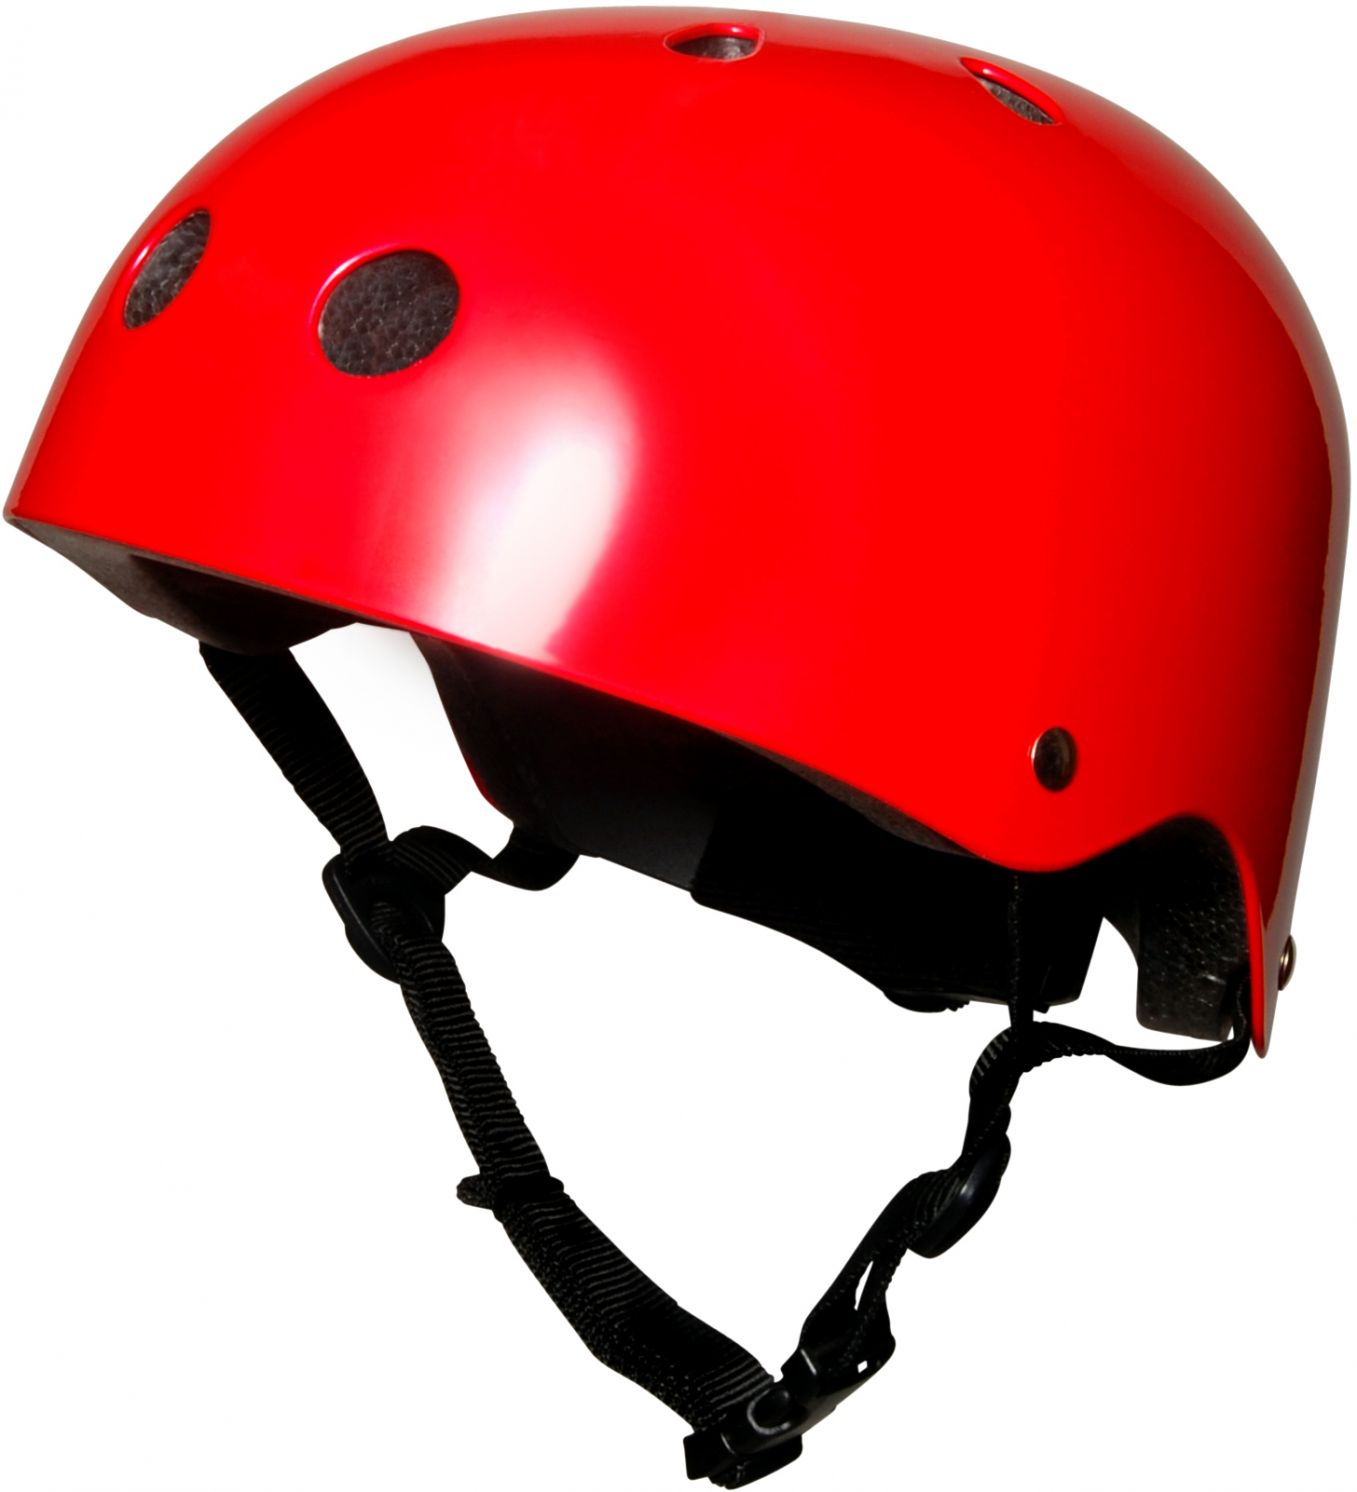 Шлем детский Kiddimoto красный металлик, размер M 53-58см